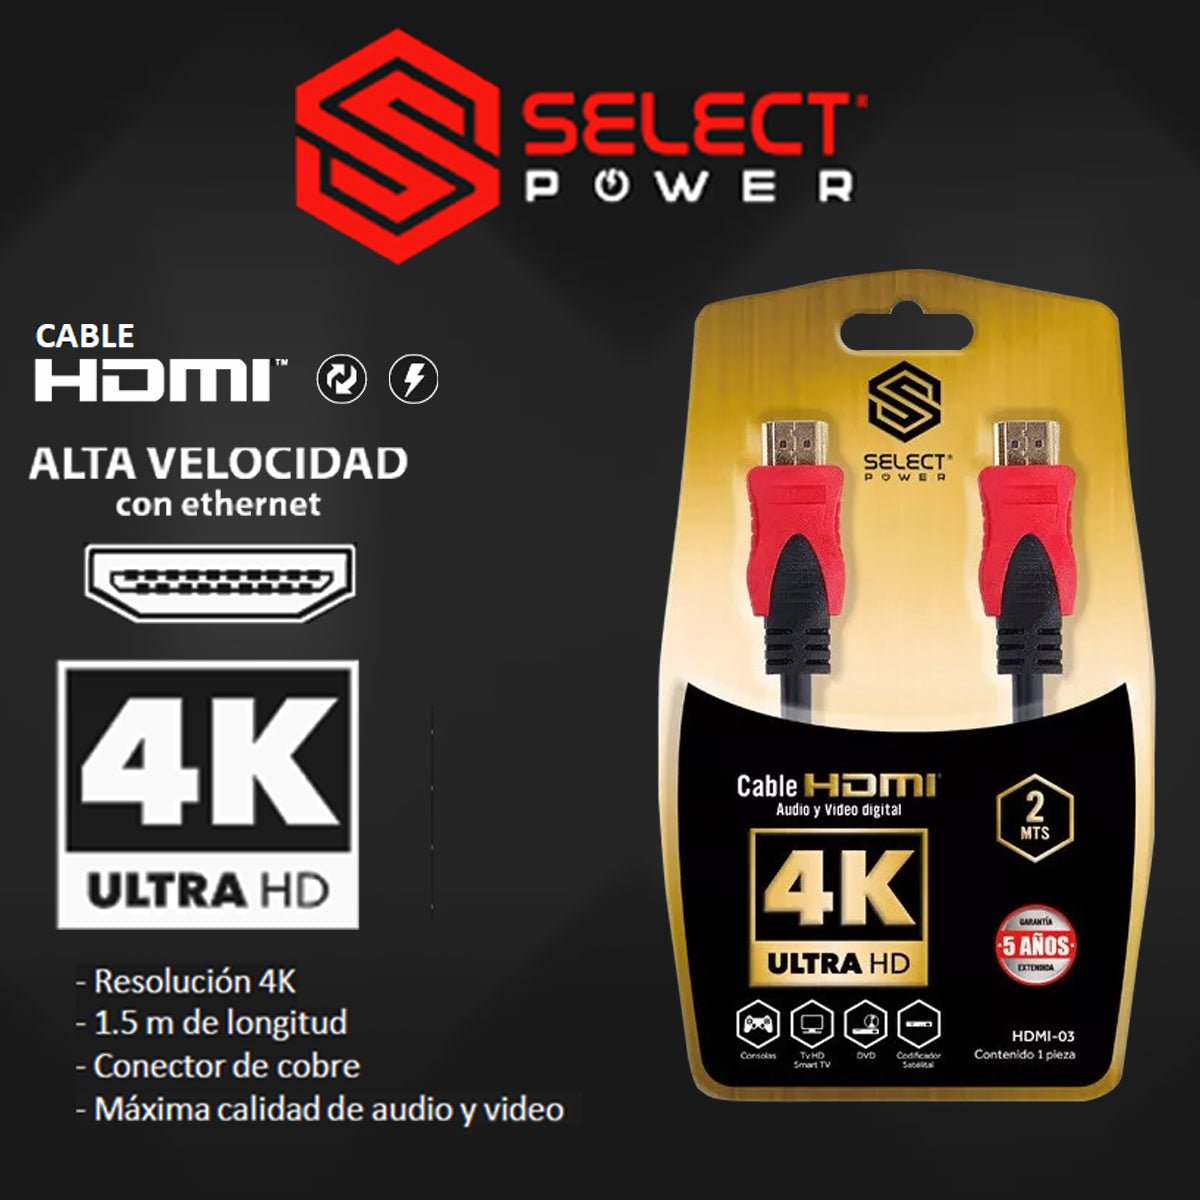 Cable HDMI HD 1080P 1,5 mt Sirve Para Conectar TV Play